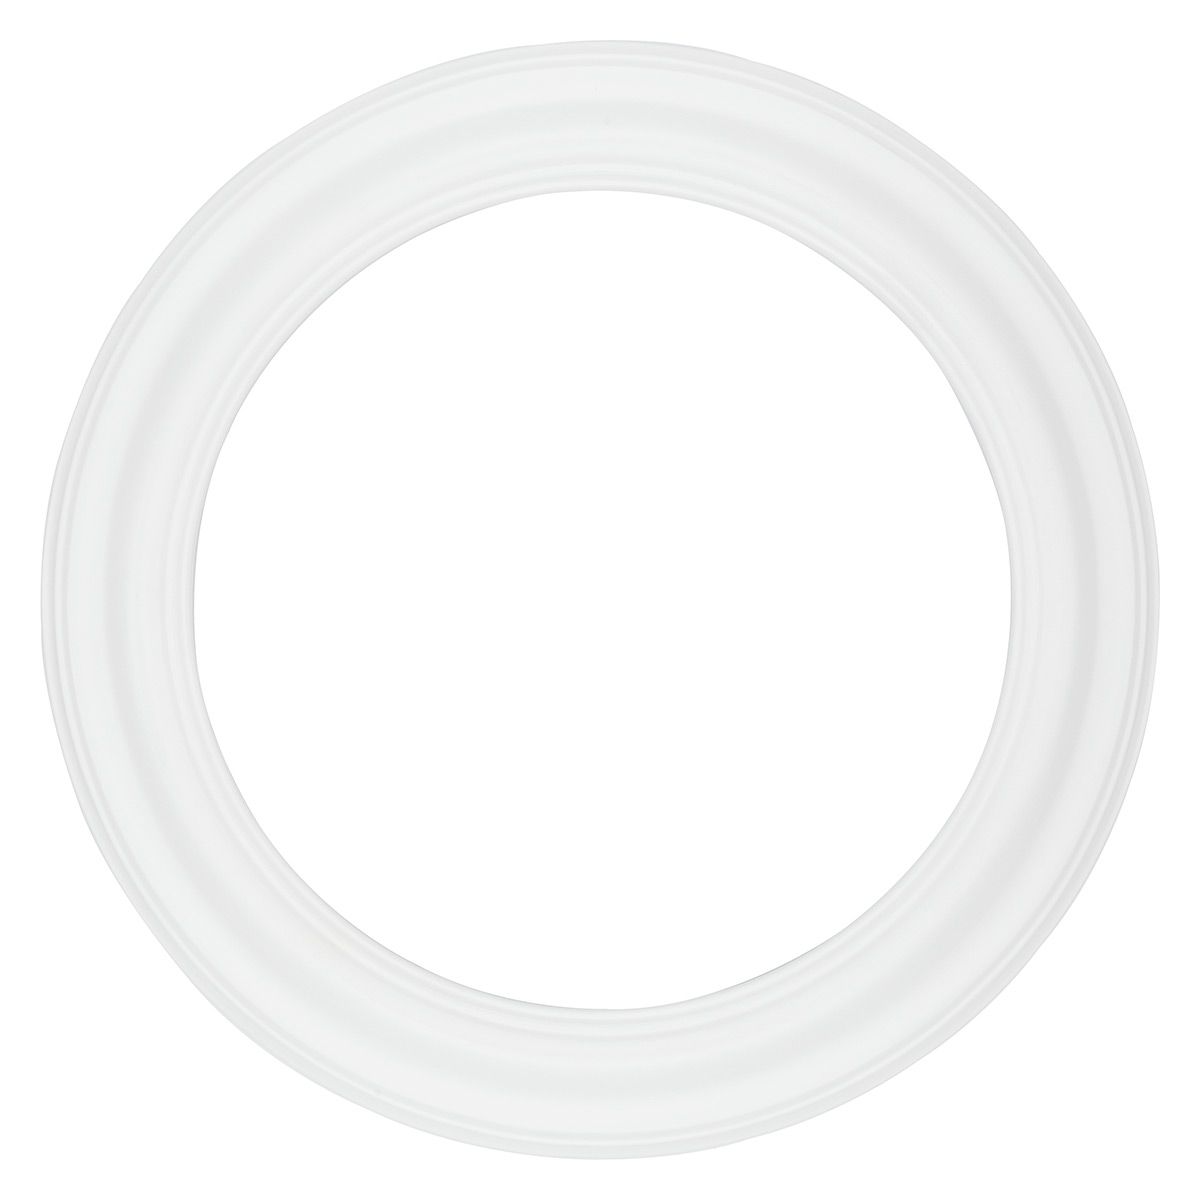 Ambiance Round Frame - White, 20" Diameter